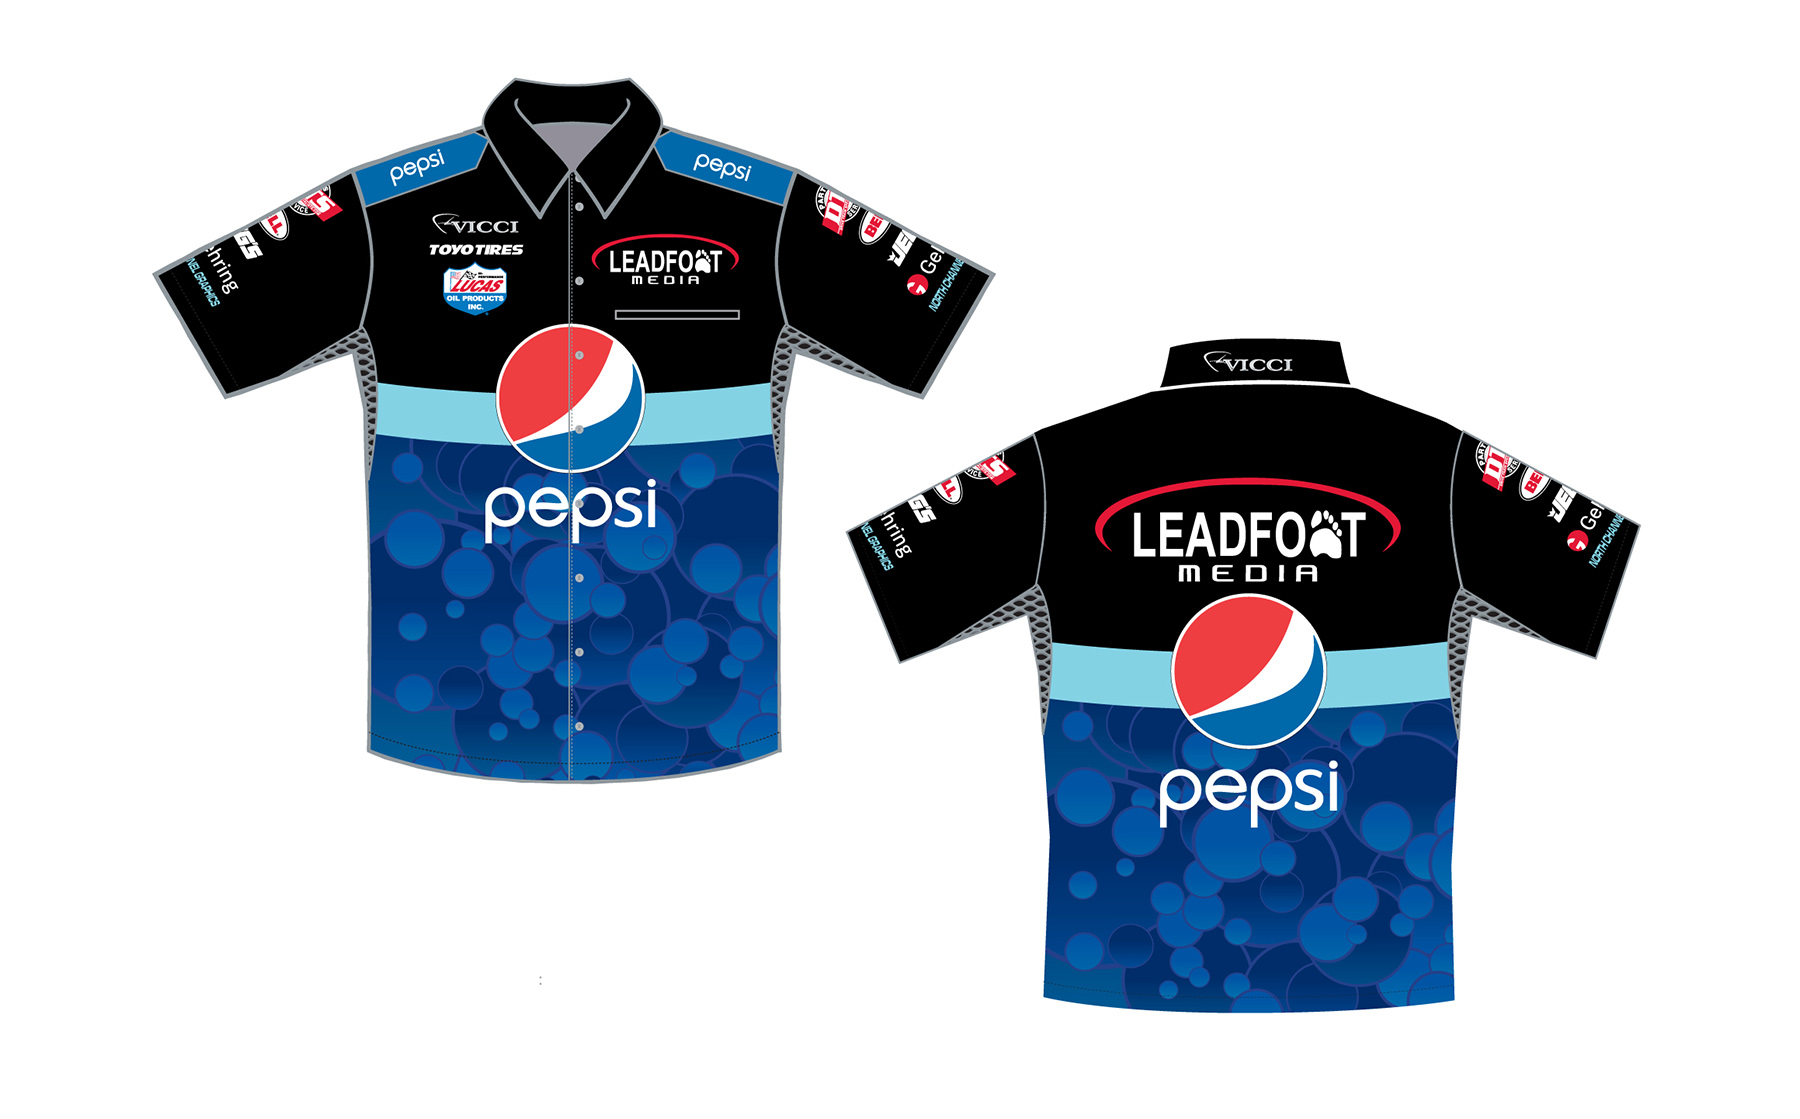 Pepsi Racing Team Livery | Ian Lewis Moore